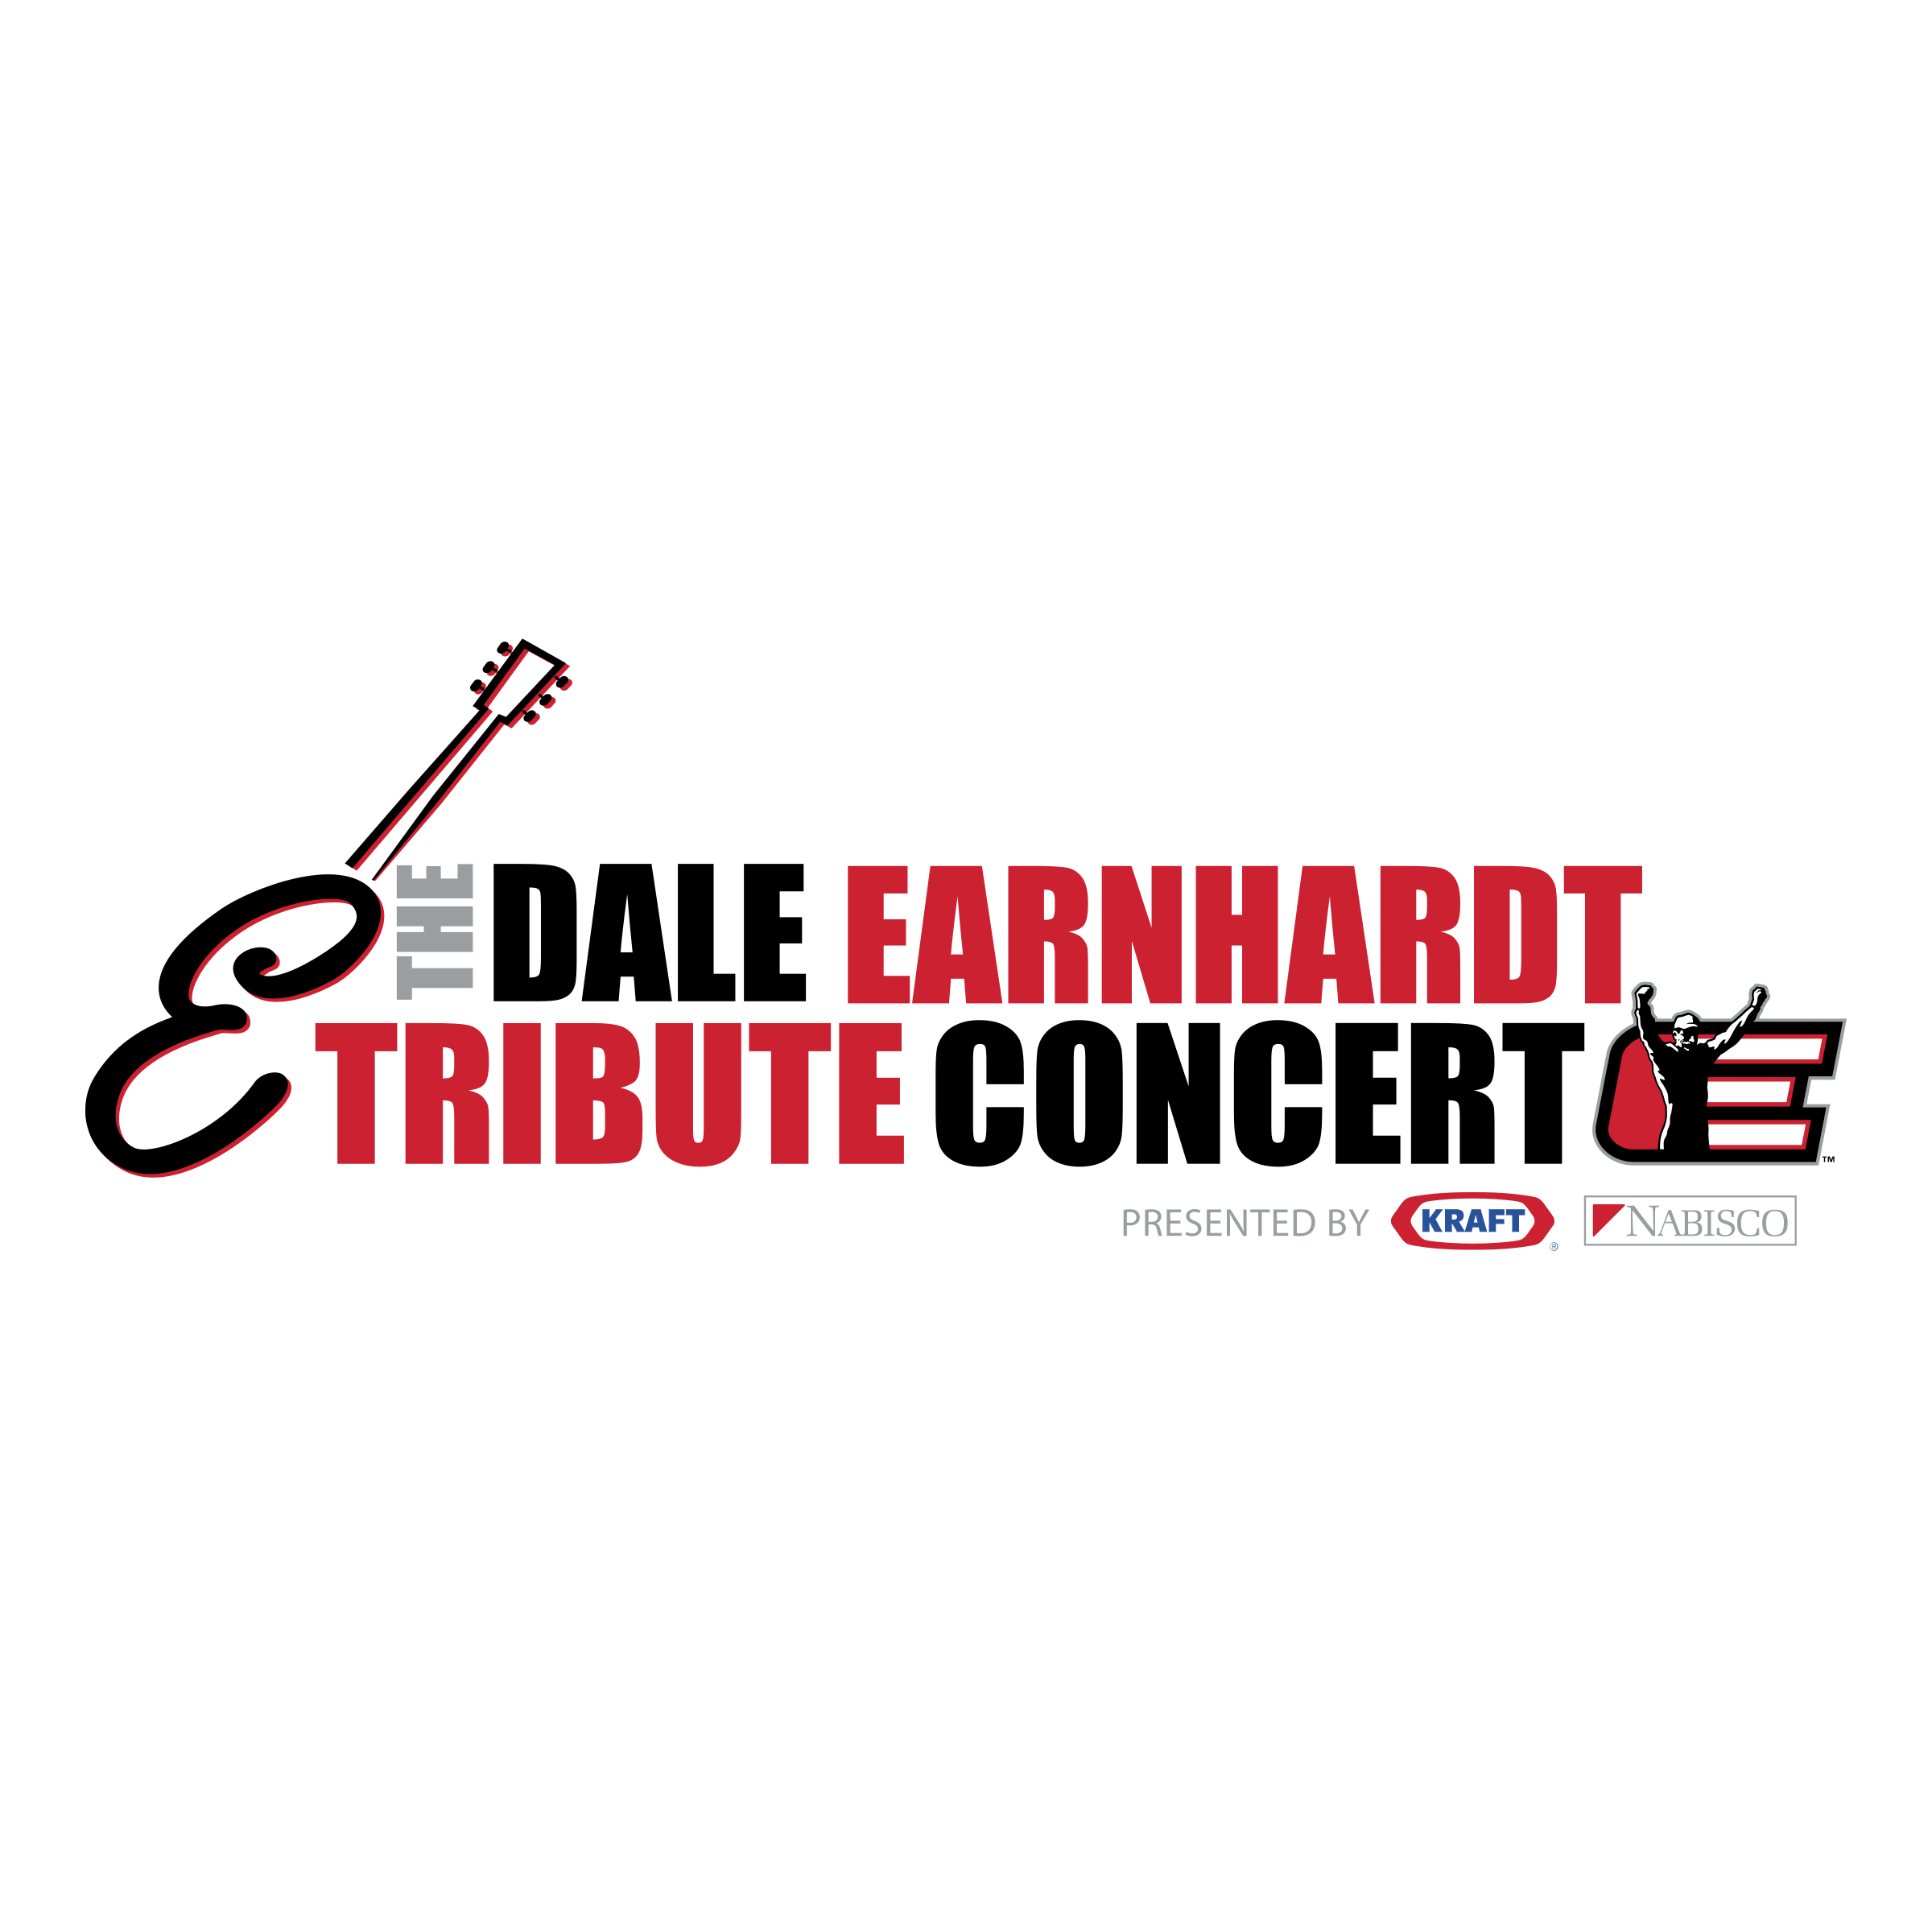 Tribute Logo - The Dale Earnhardt Tribute Concert Logo PNG Transparent & SVG Vector